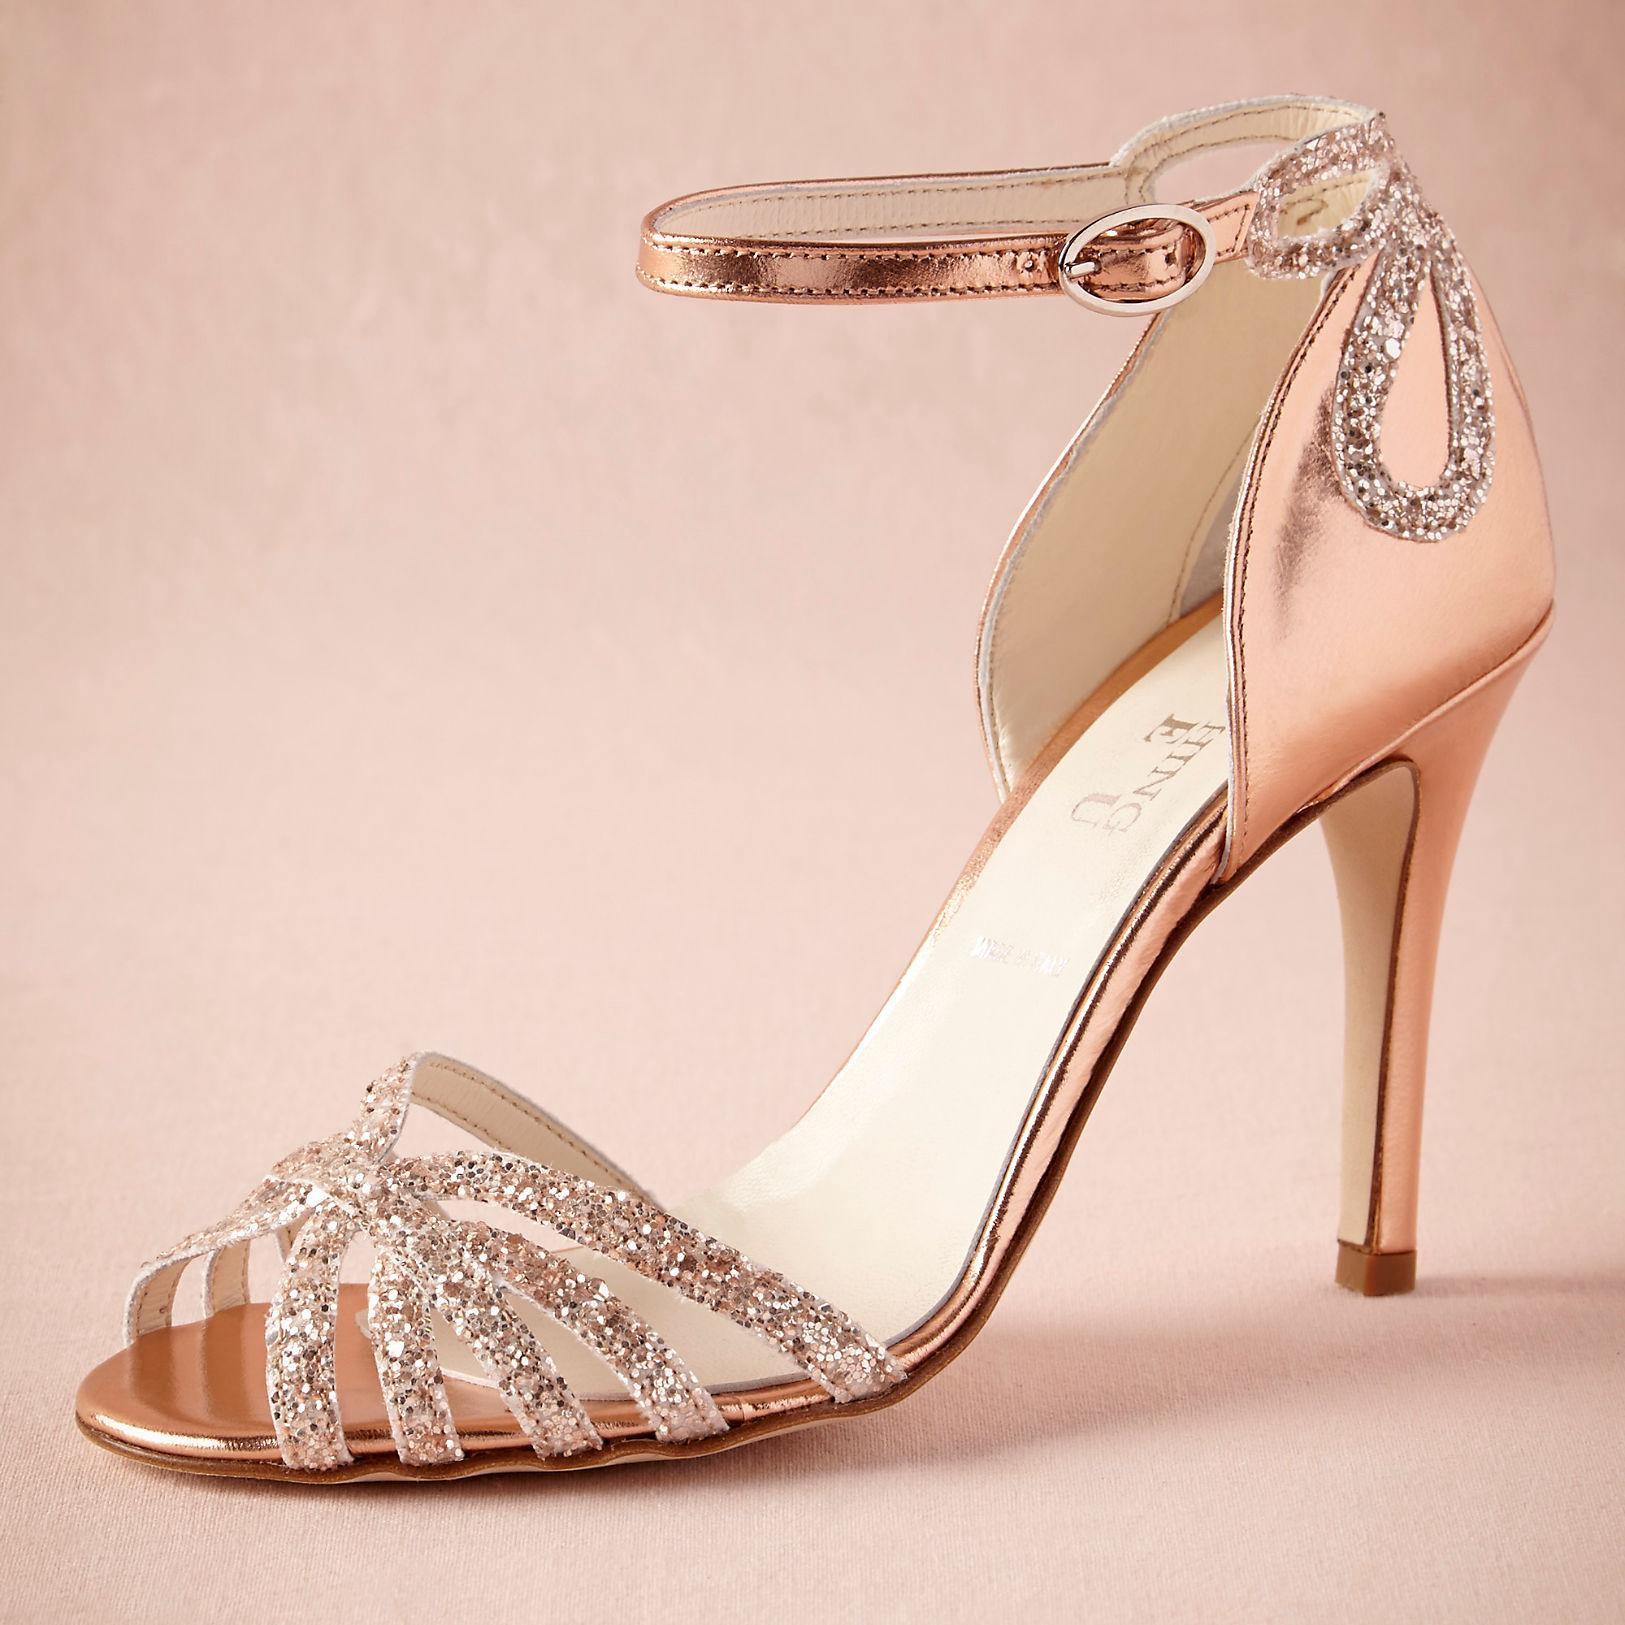 Rose Gold Glittered Heel Real Wedding Shoes Pumps Sandals Gold ...